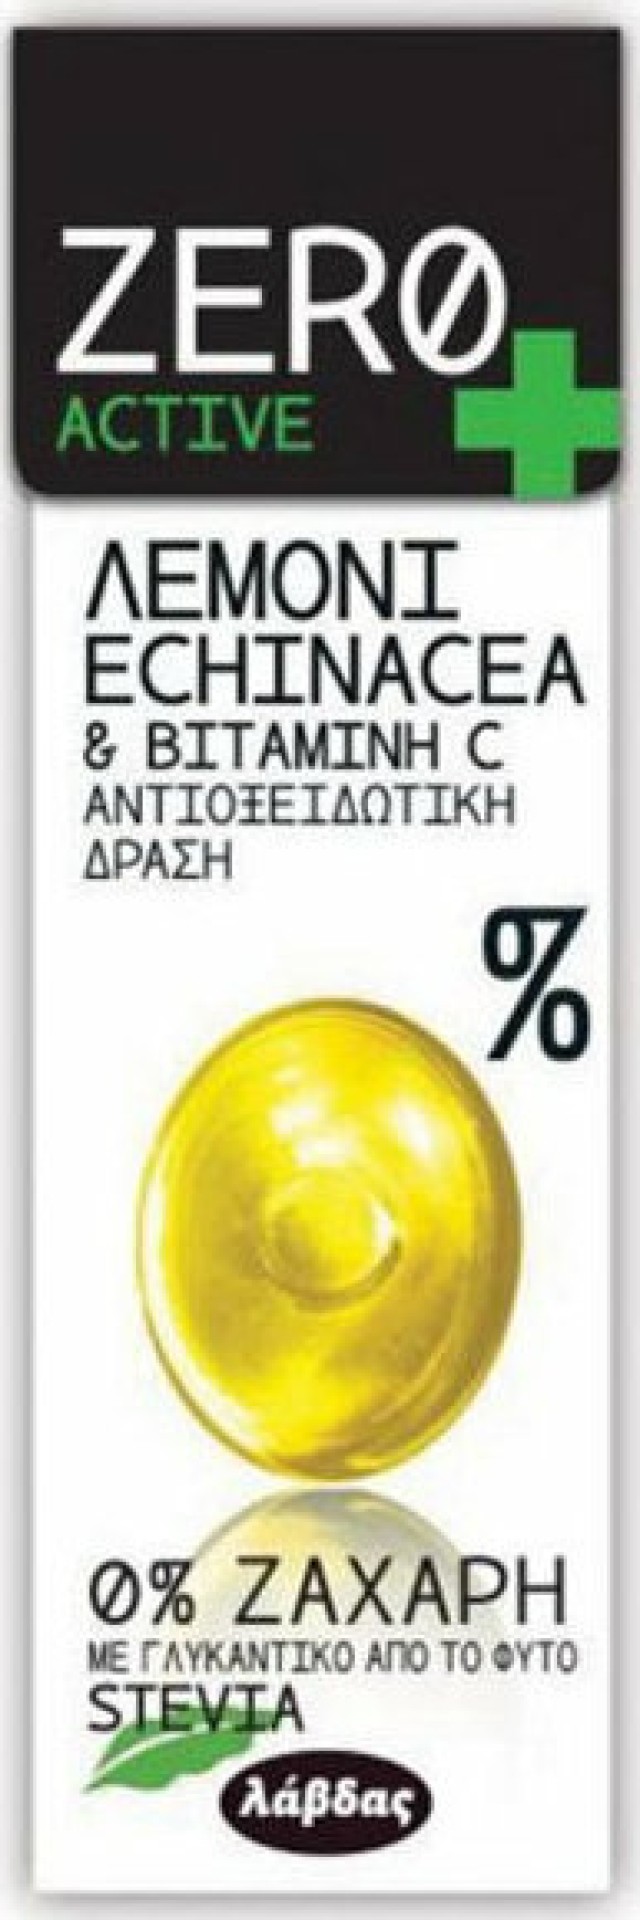 Zero Active Καραμέλες Λεμόνι Echinacea & Βιταμίνη C με Αντιοξειδωτική Δράση και Stevia 32gr